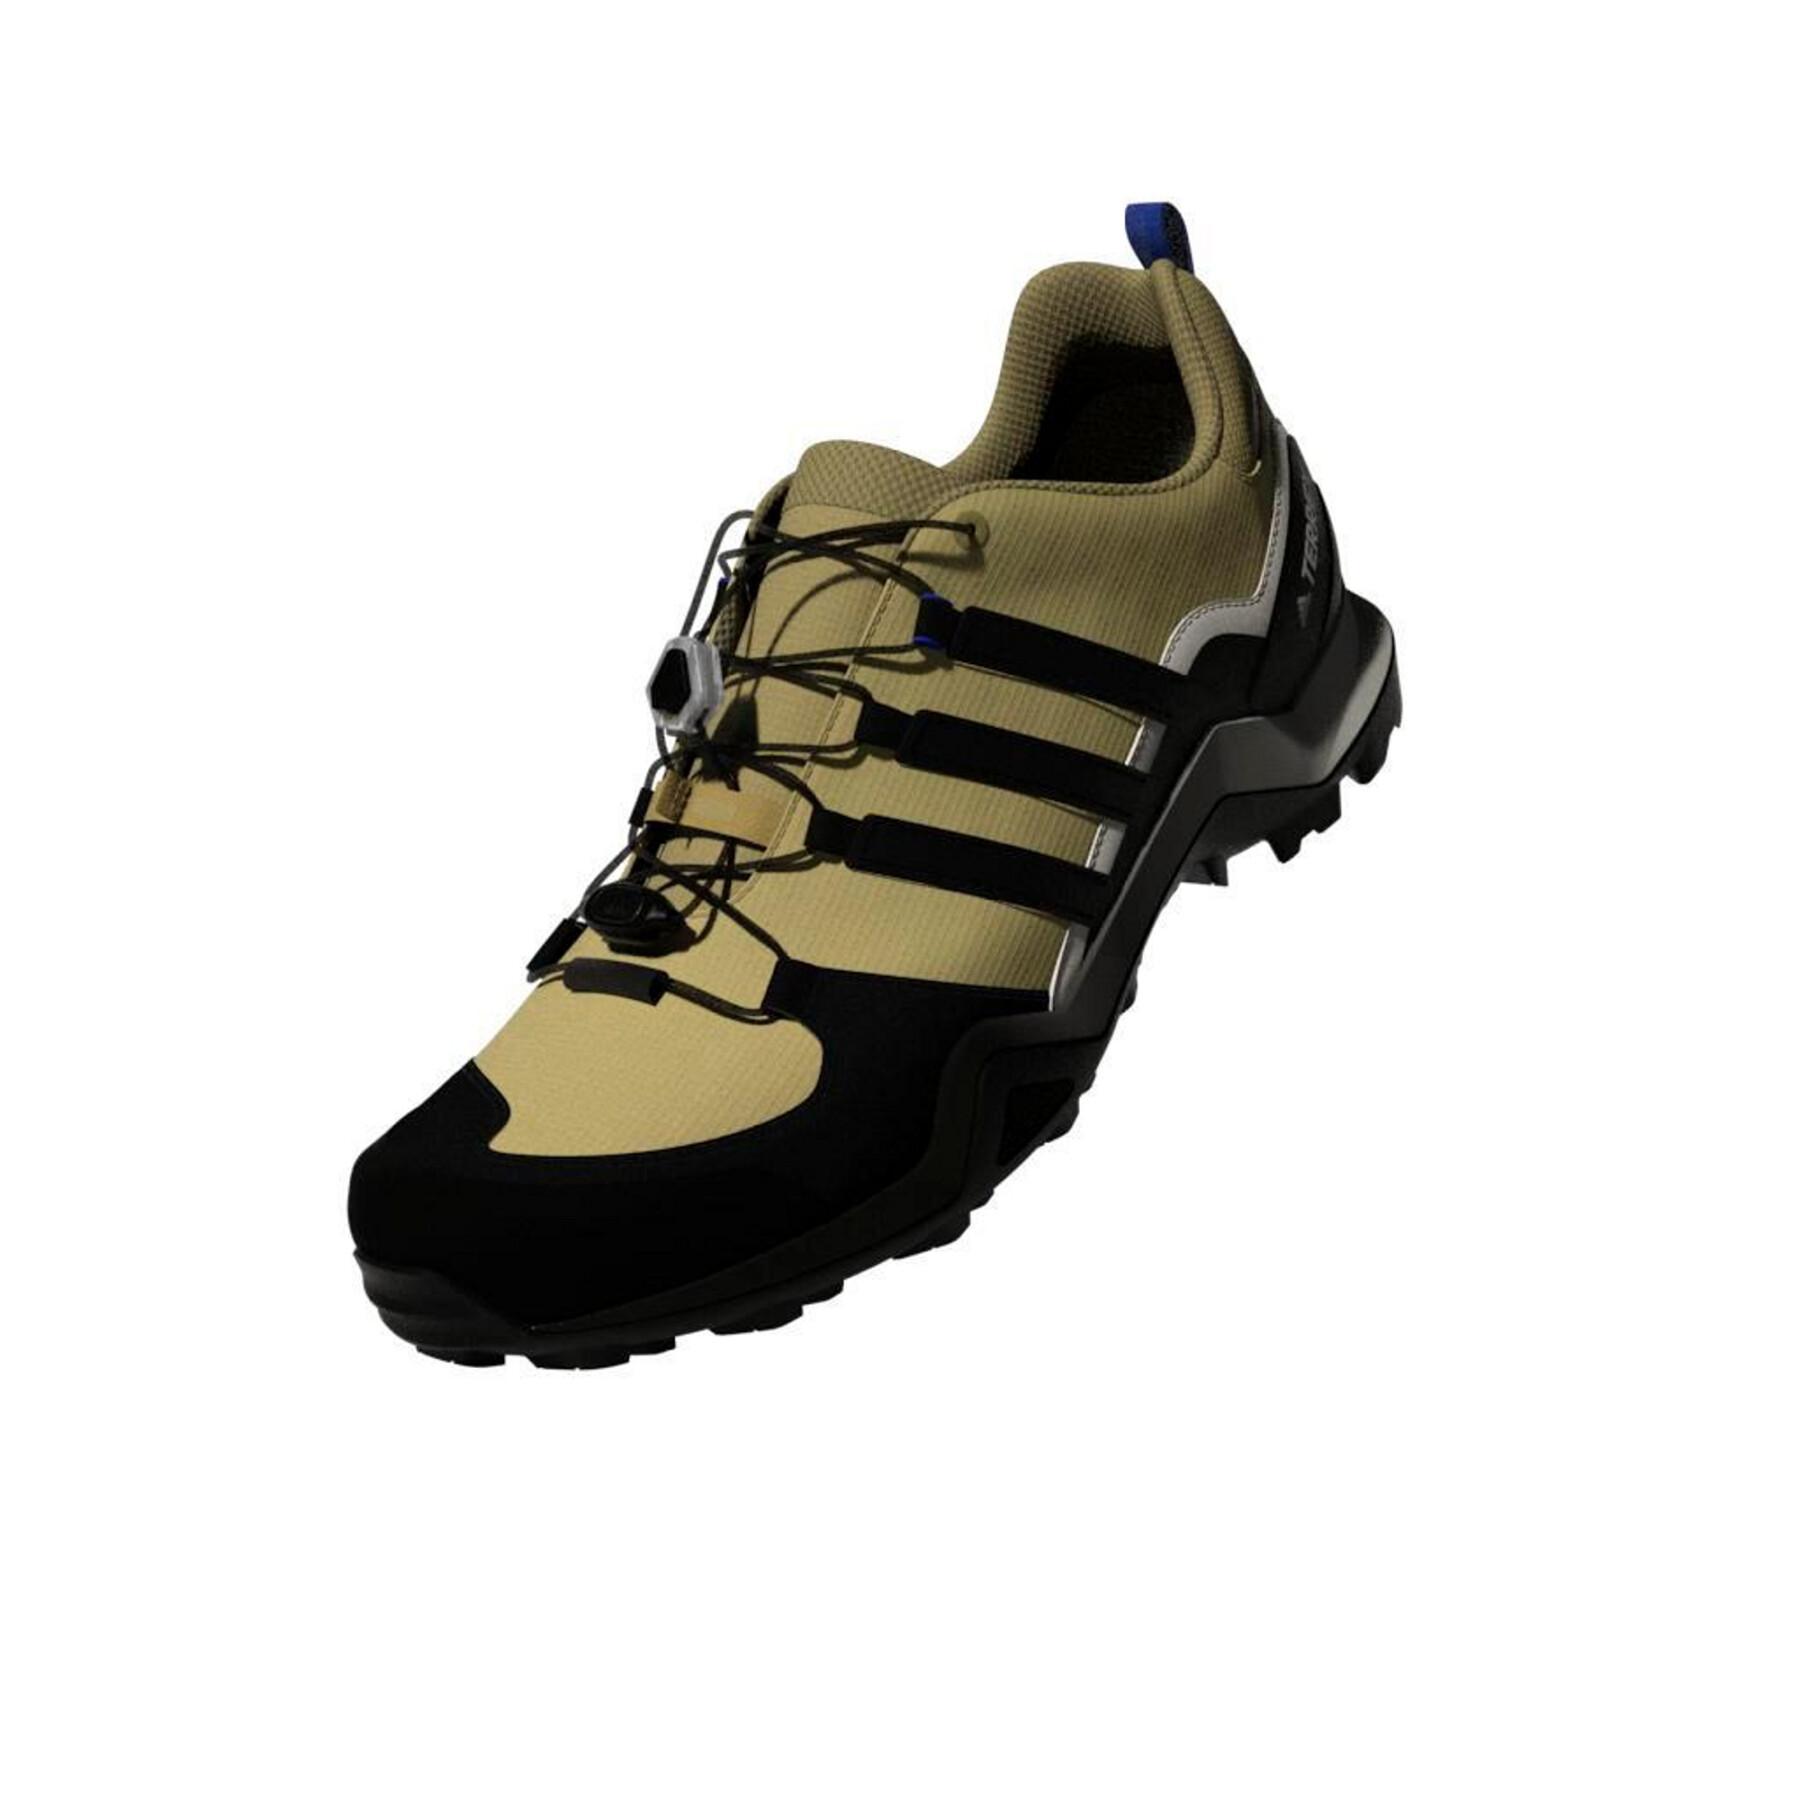 Chaussures de randonnée adidas Terrex Swift R2 Gore-Tex